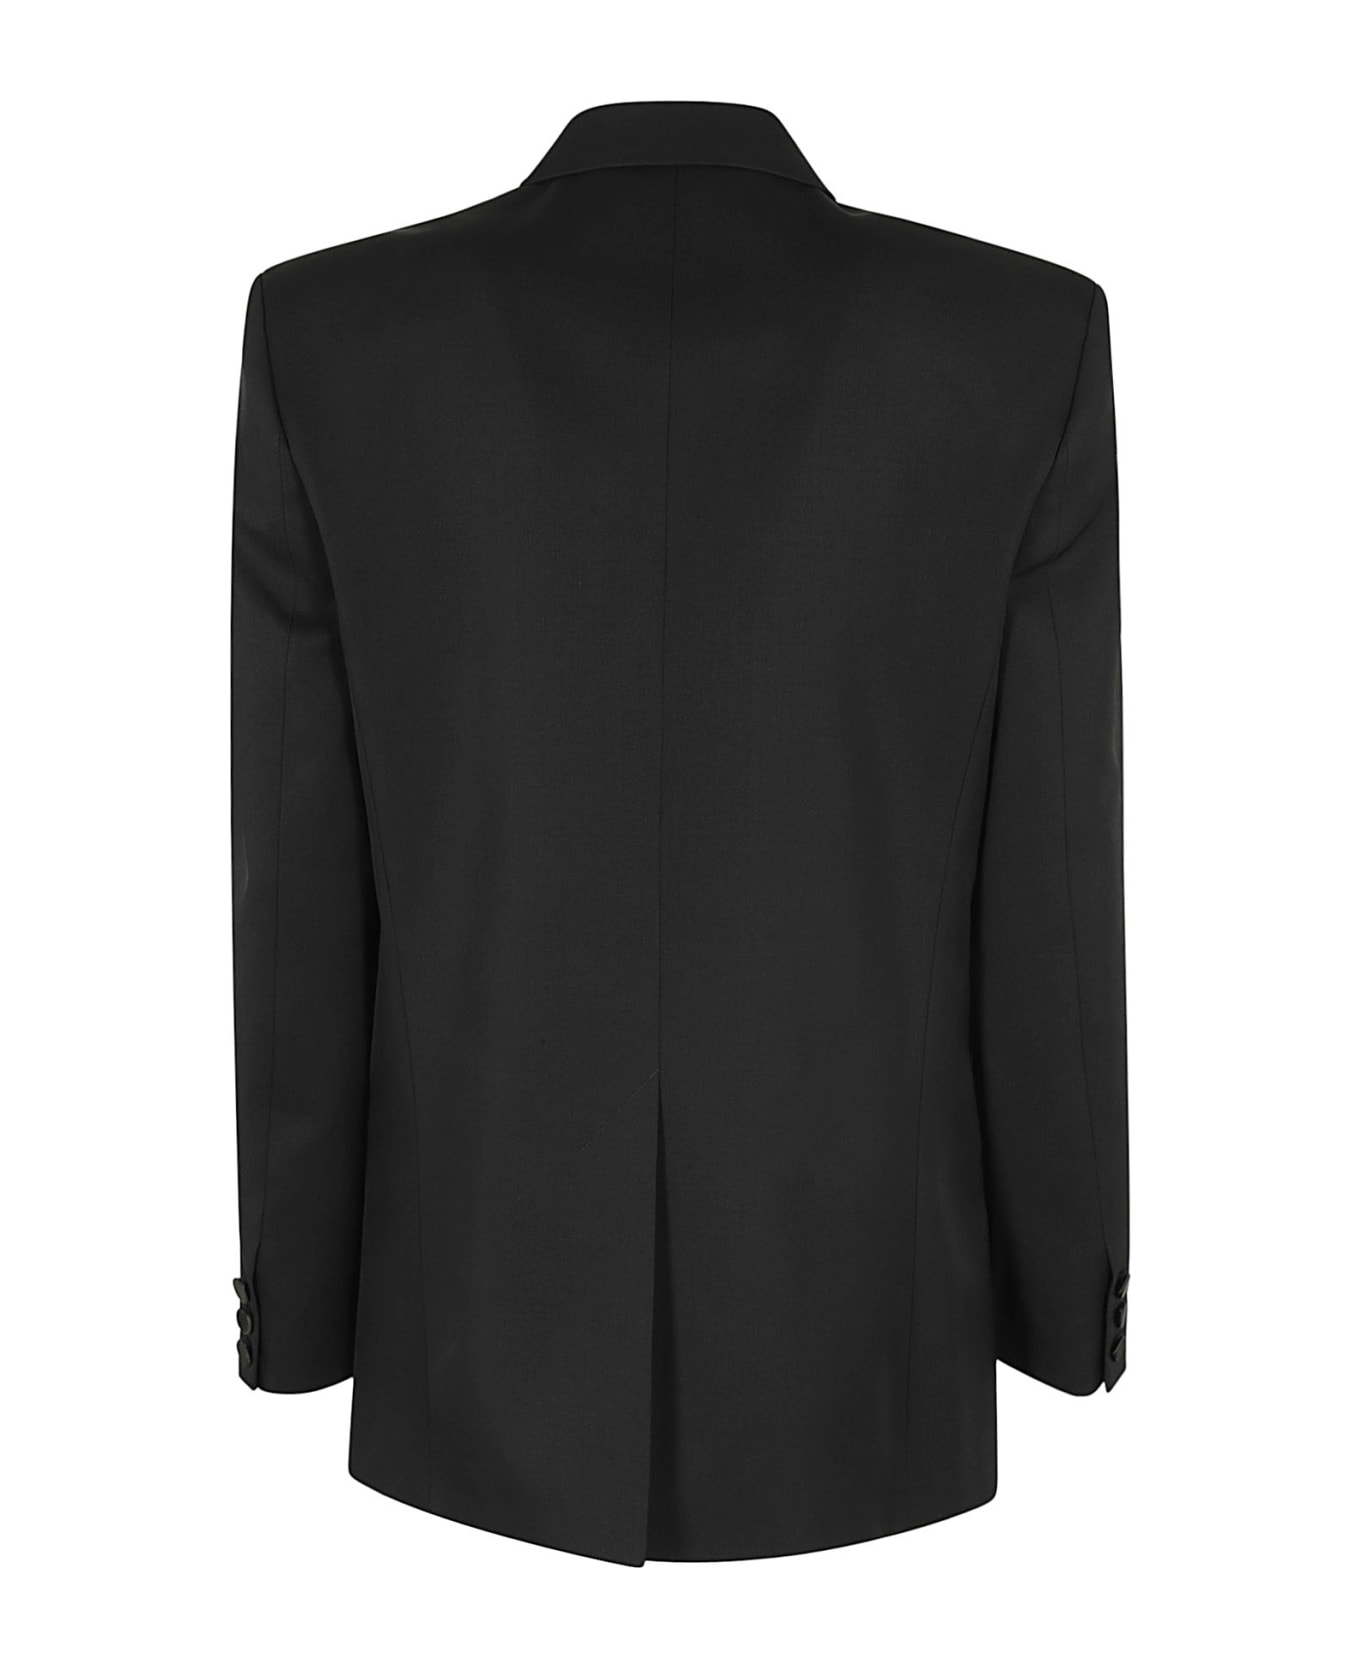 Isabel Marant 'peagan' Tuxedo Blazer - Bk Black